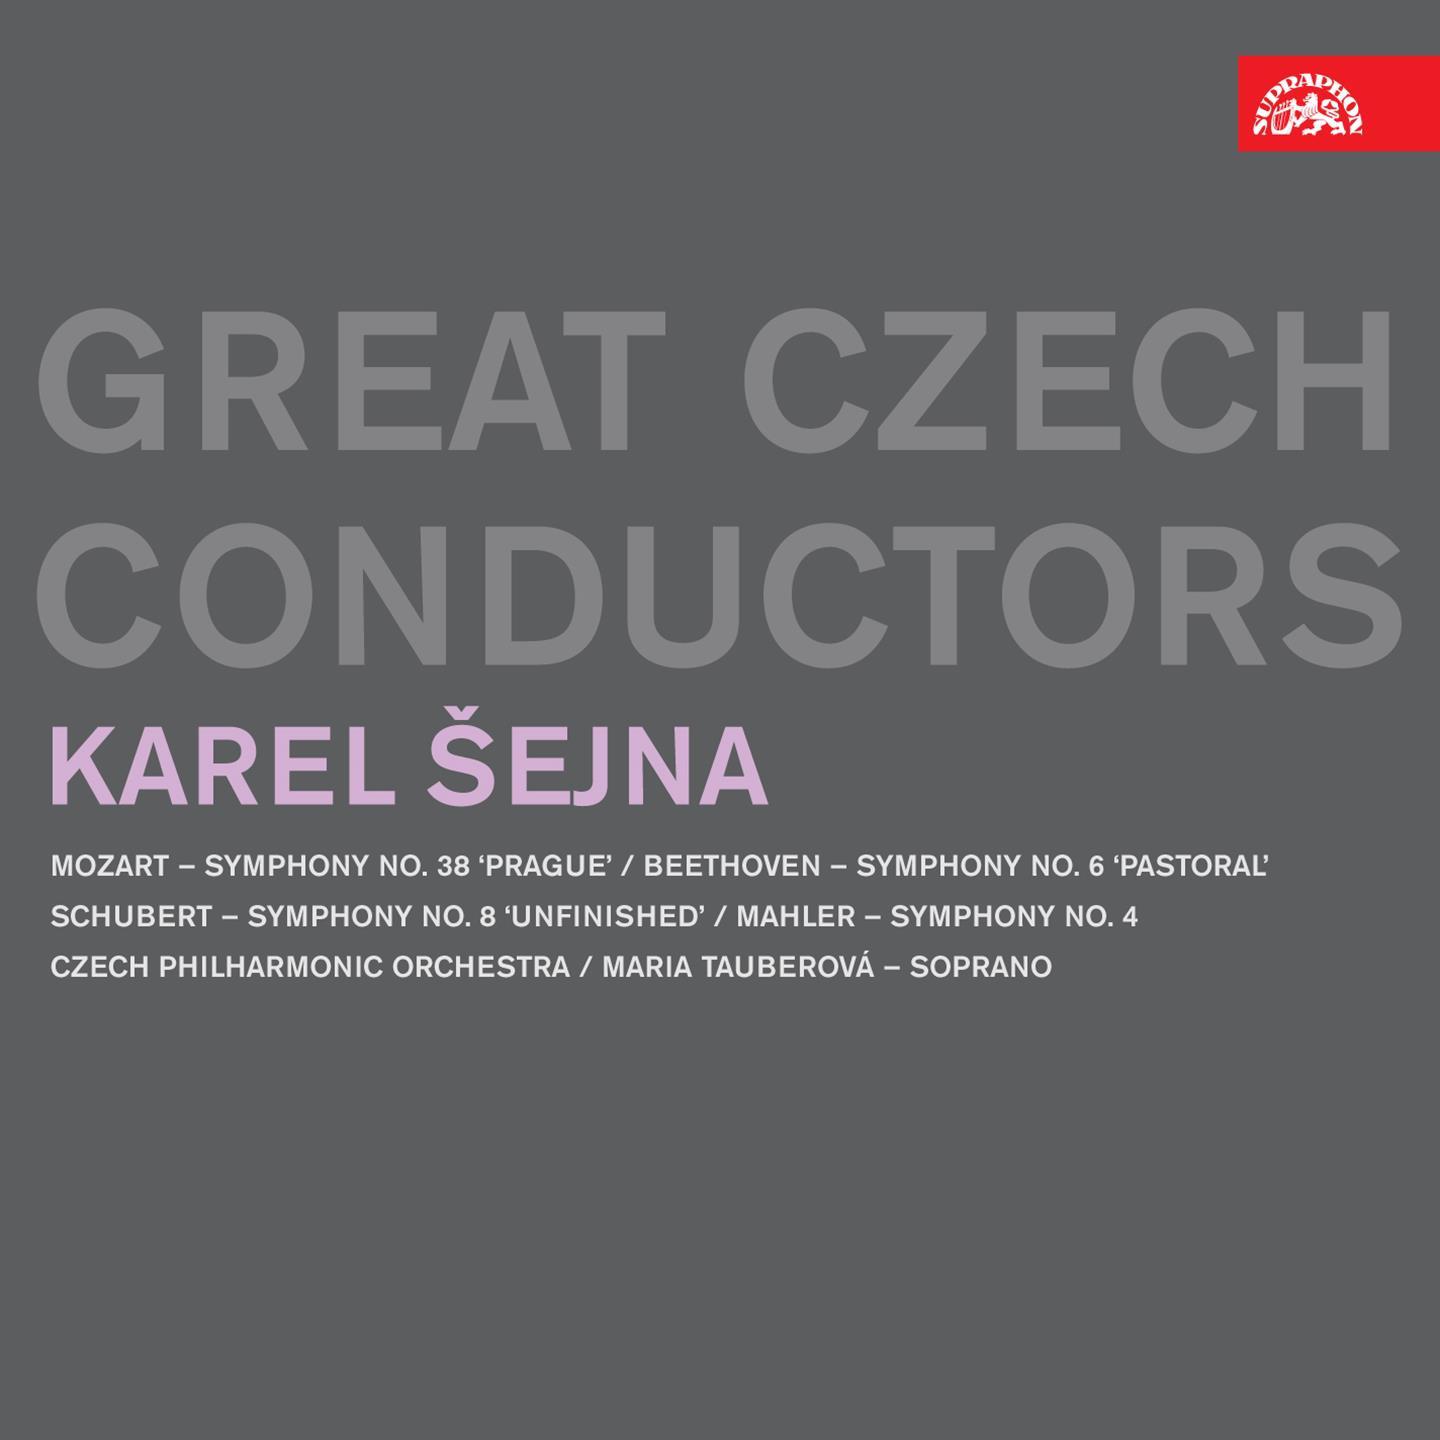 Karel ejna. Great Czech Conductors